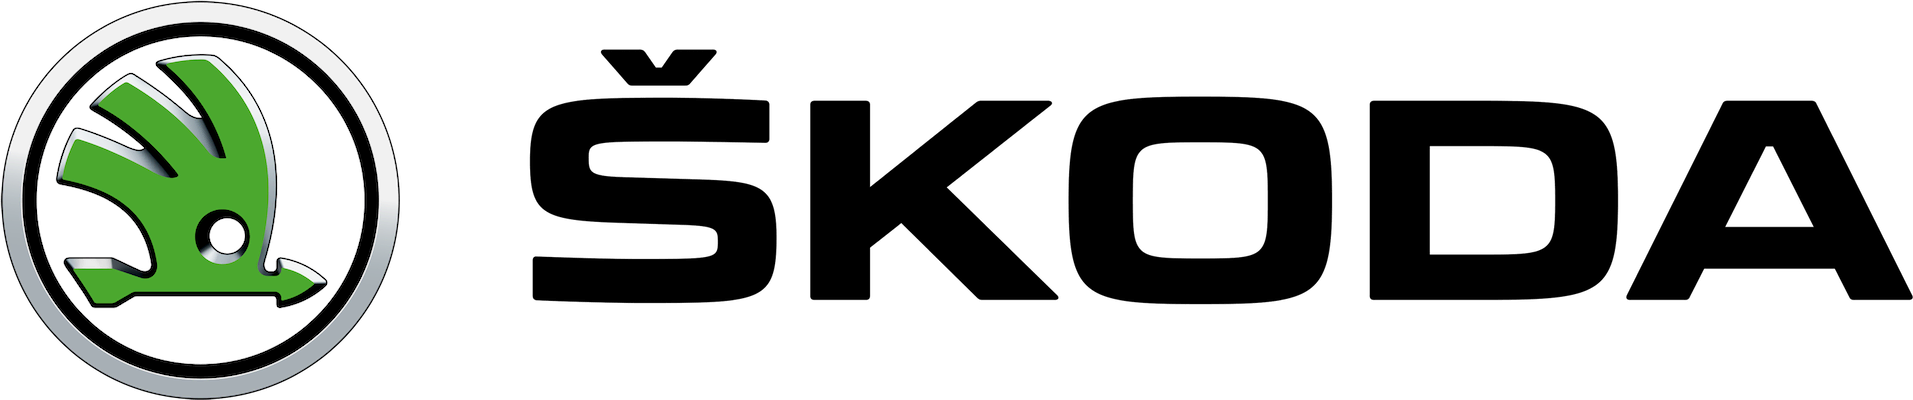 Skoda veihjelp logo